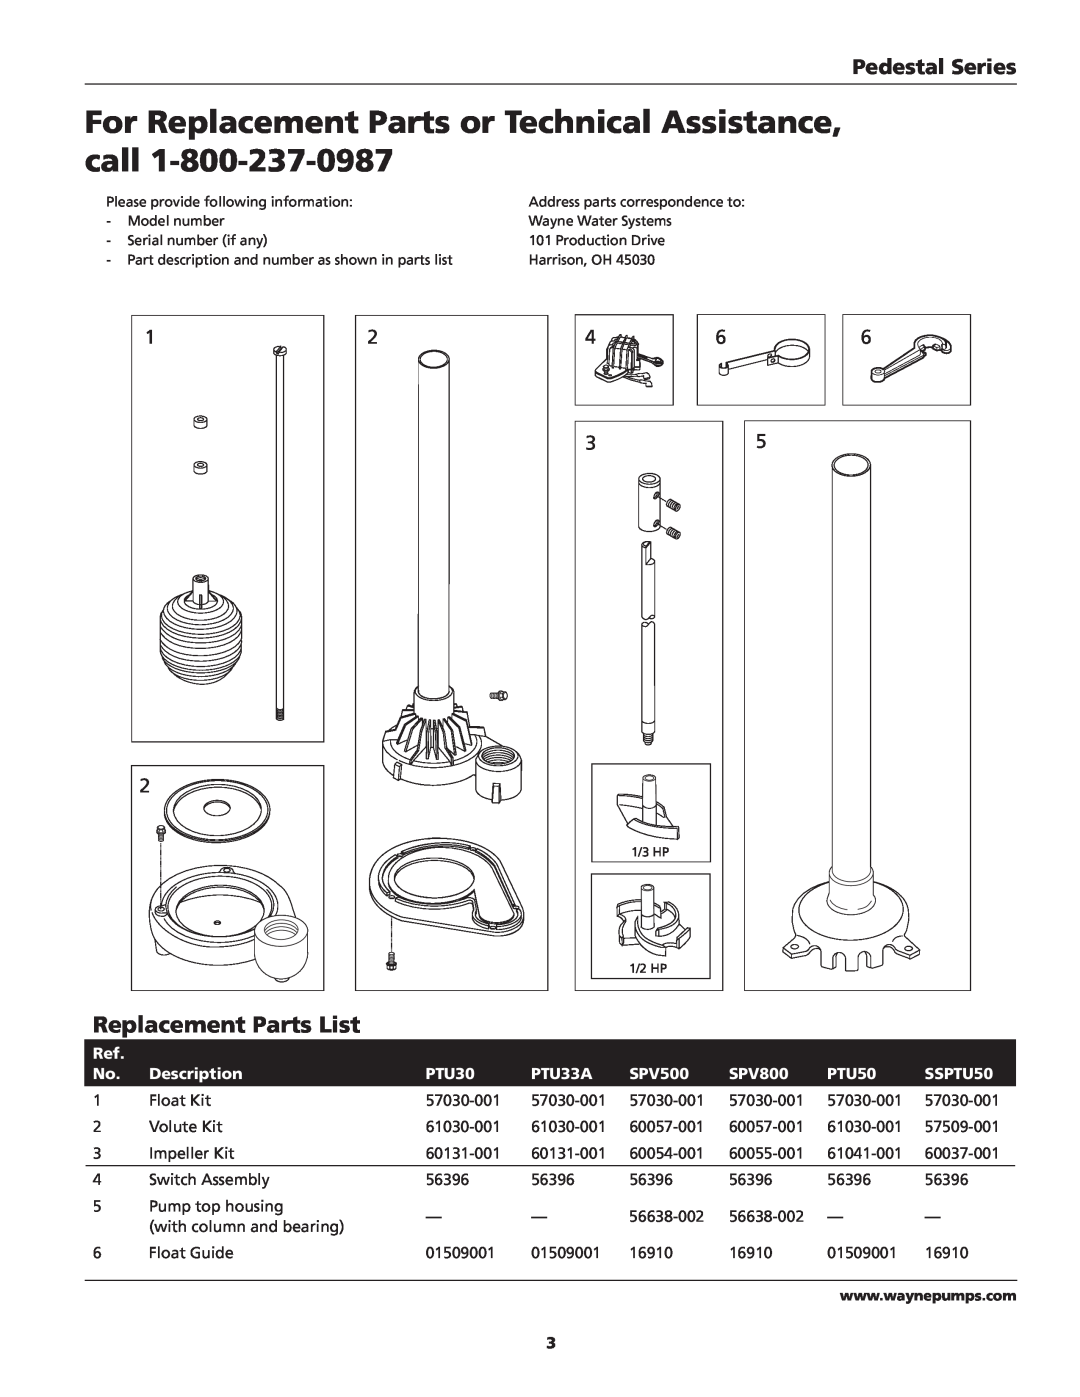 Wayne SPV800, 360516-001 Replacement Parts List, Pedestal Series, Ref No, Description, PTU30, PTU33A, SPV500, SSPTU50 